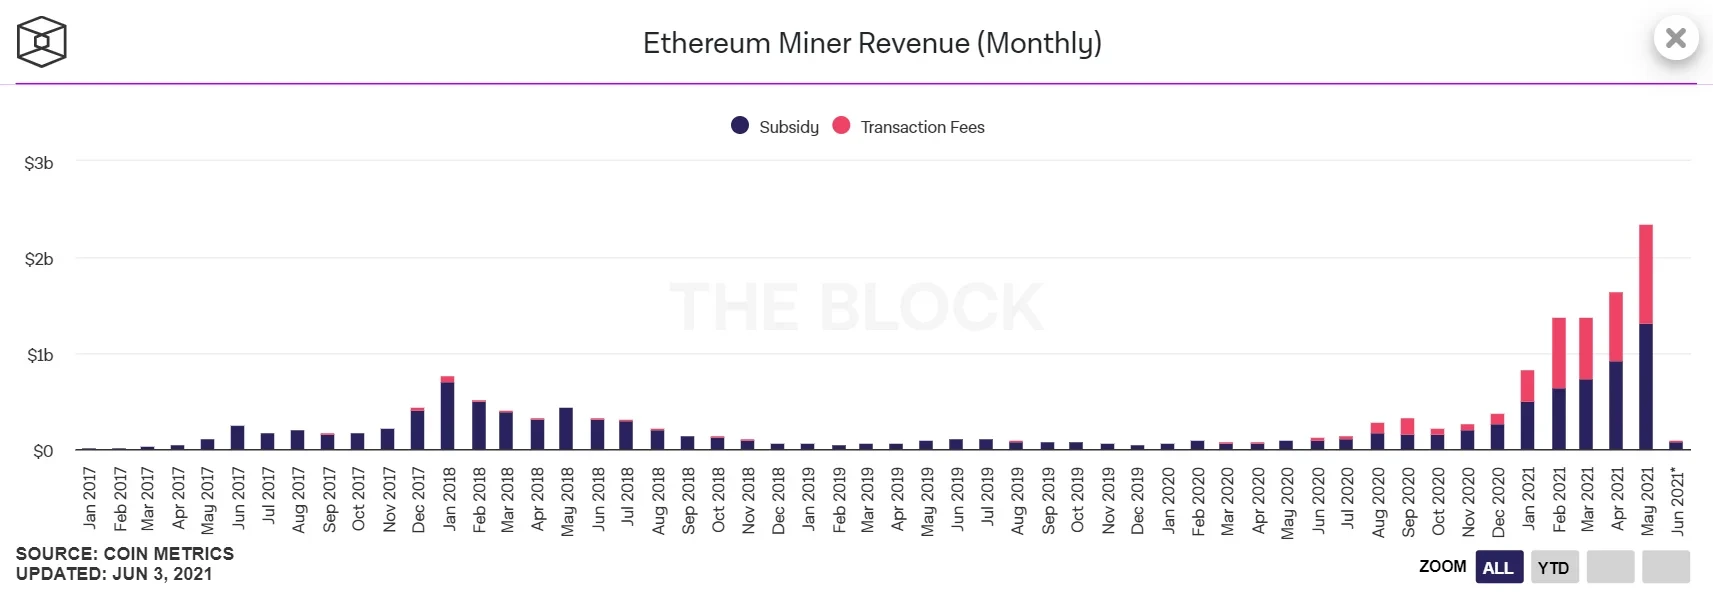 Ethereum Miner Revenue (Monthly)